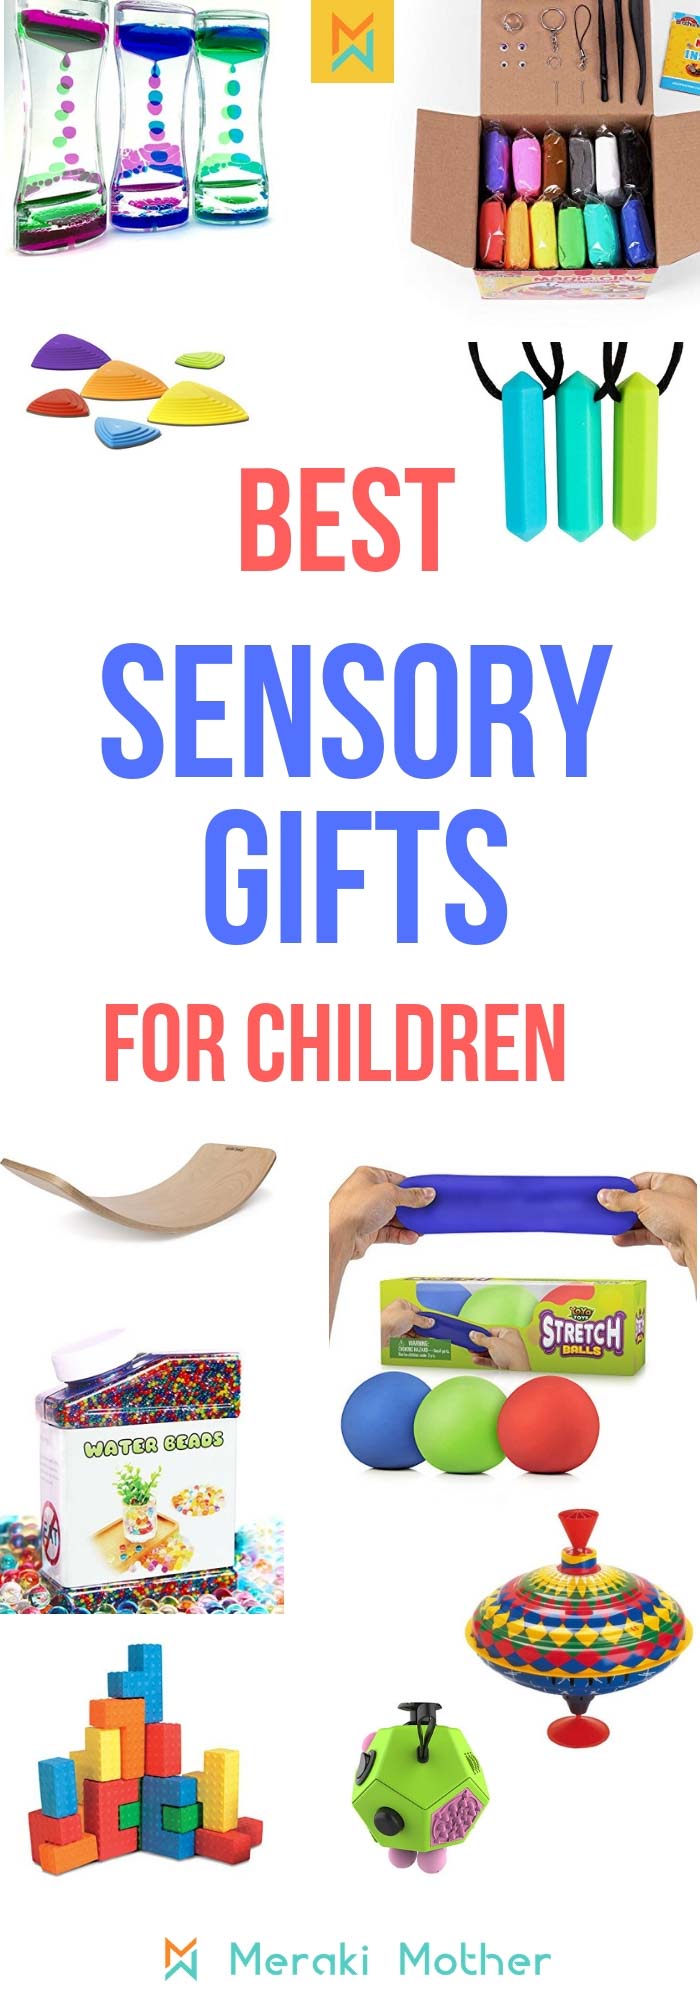 Sensory Toys